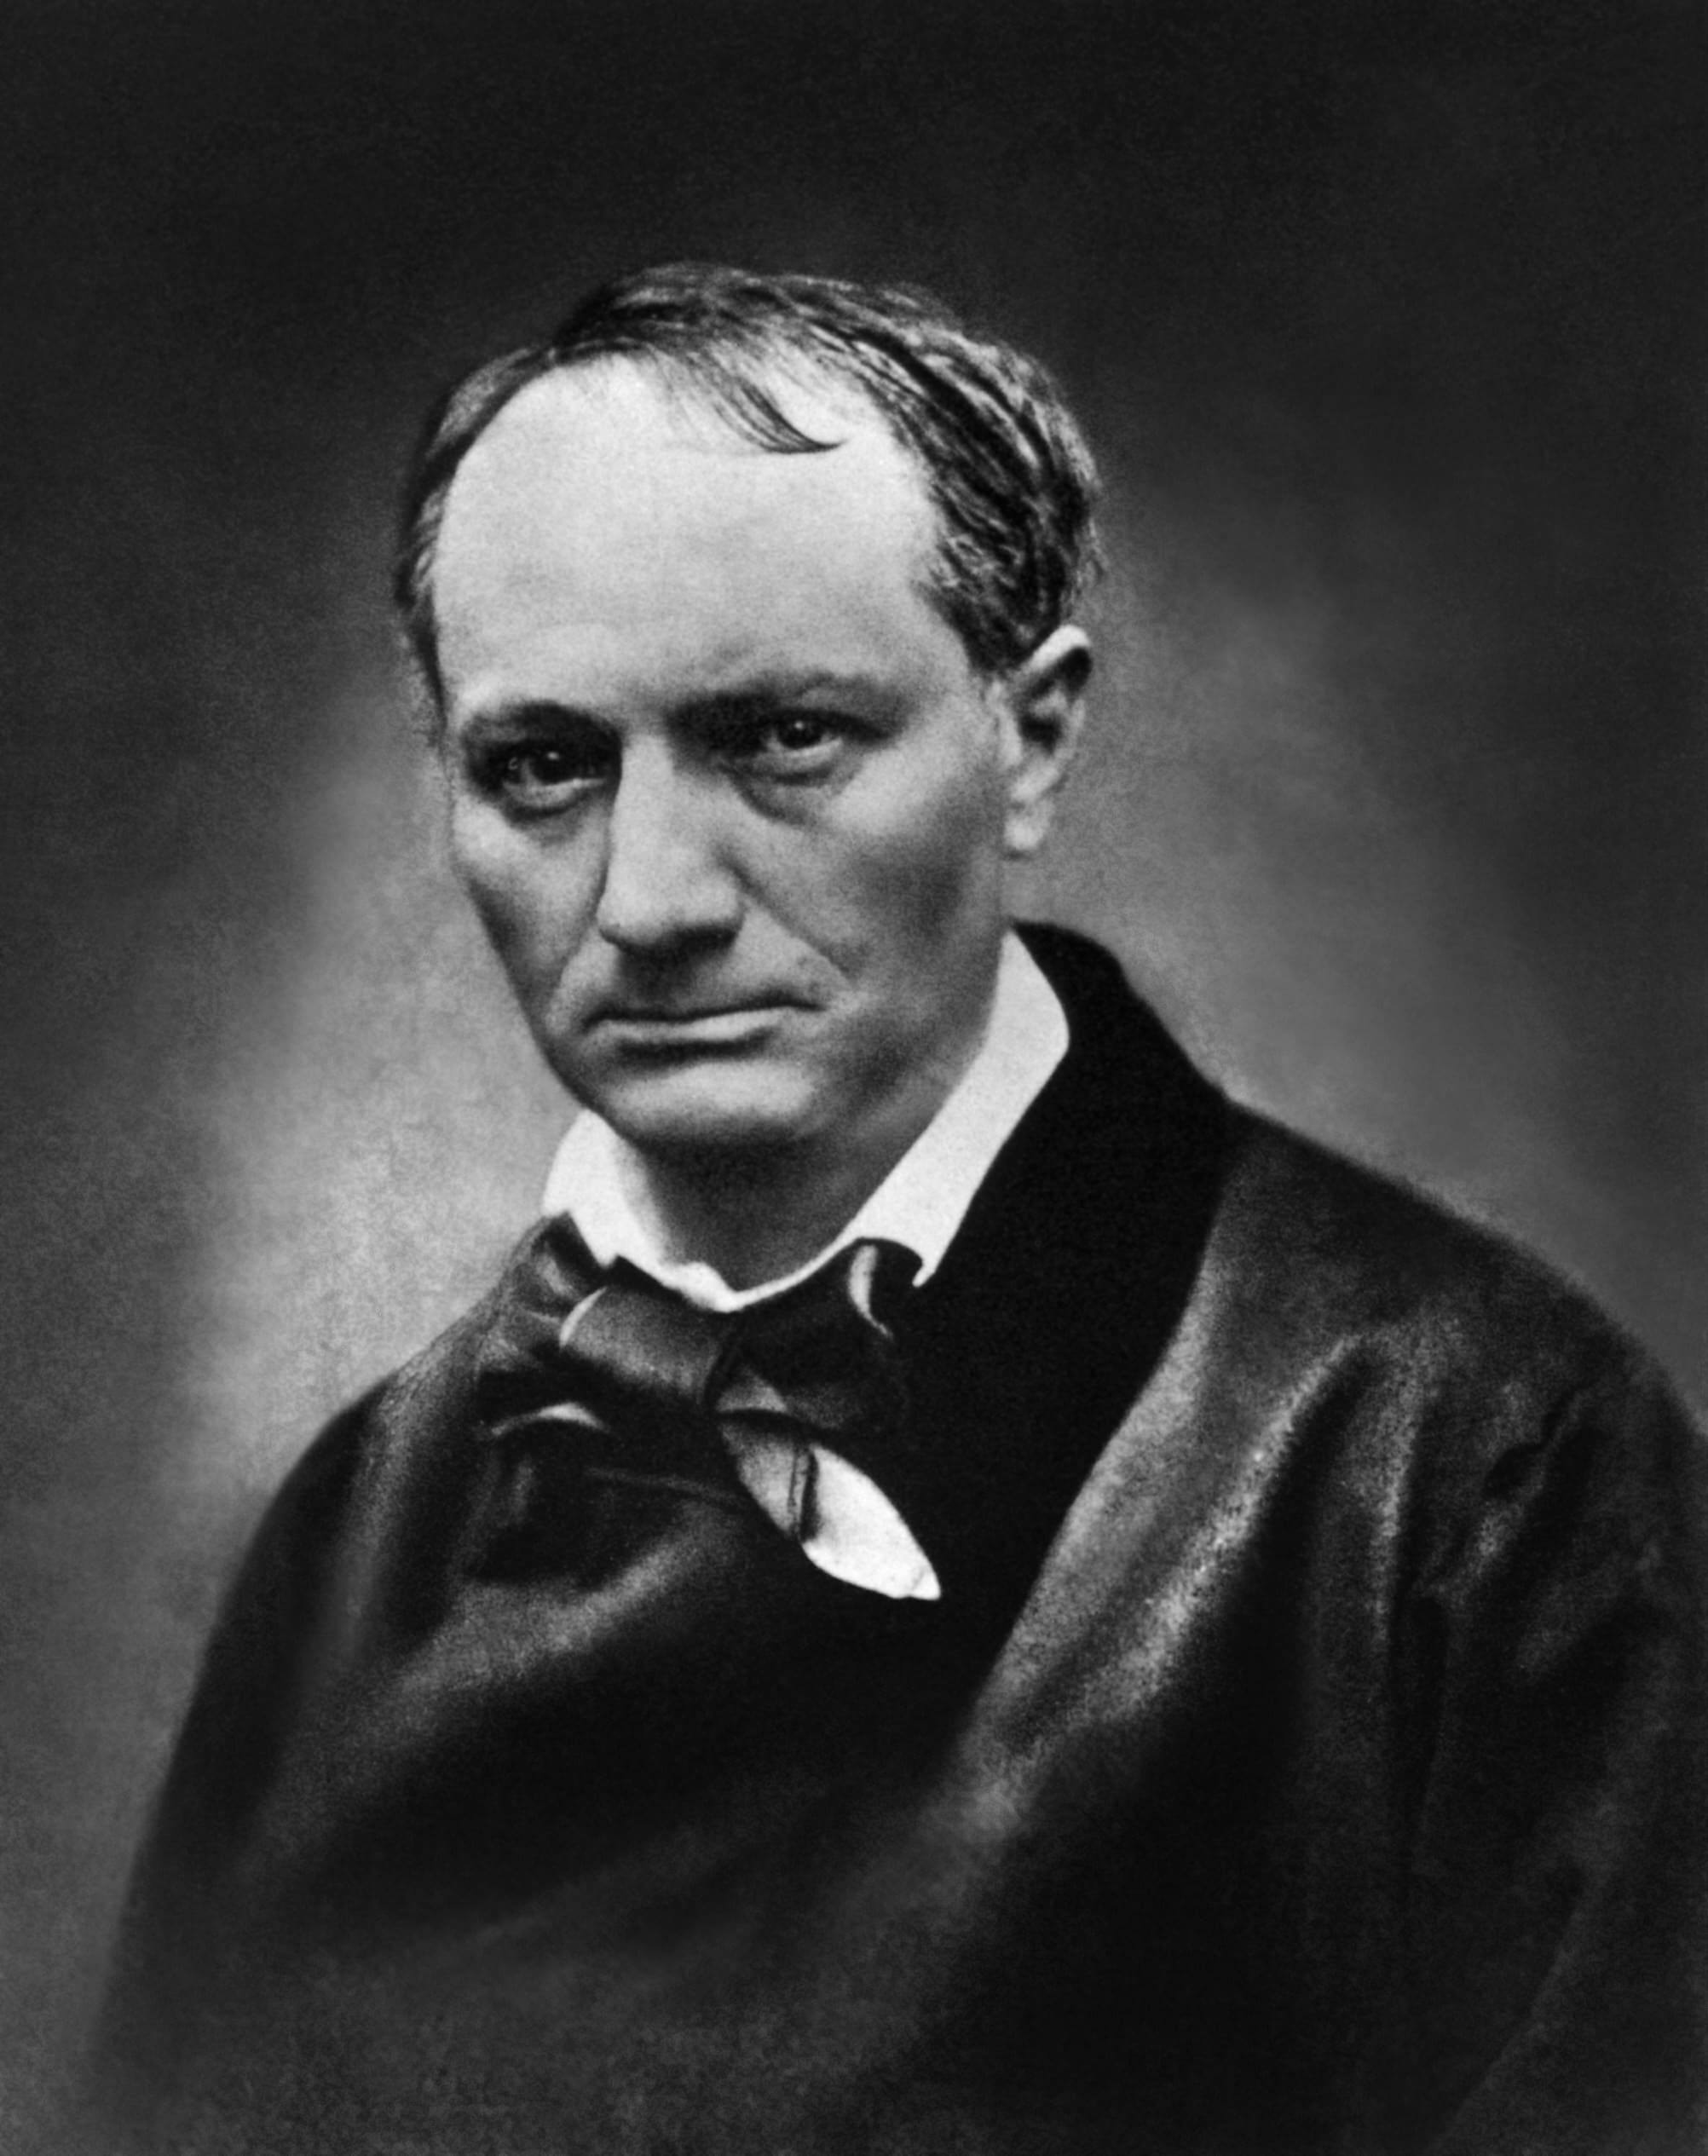  Charles Baudelaire biografy: skiednis, libben, gedichten en wurken